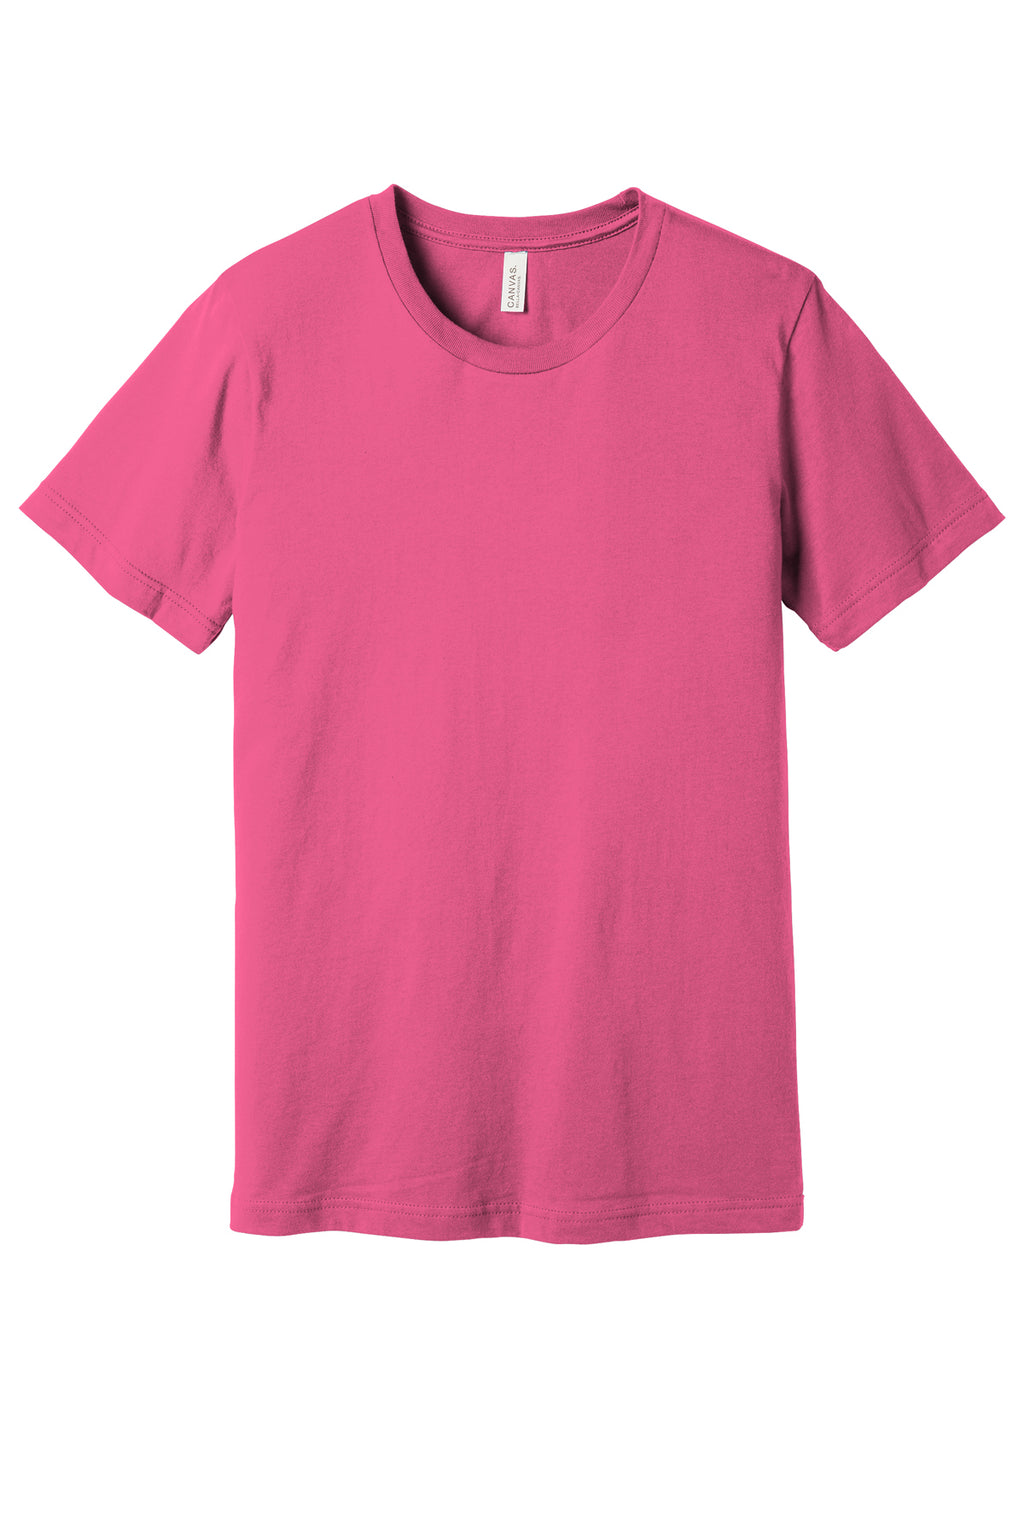 Bella Canvas Mens/Unisex Cotton Short Sleeve Shirts Charity Pink